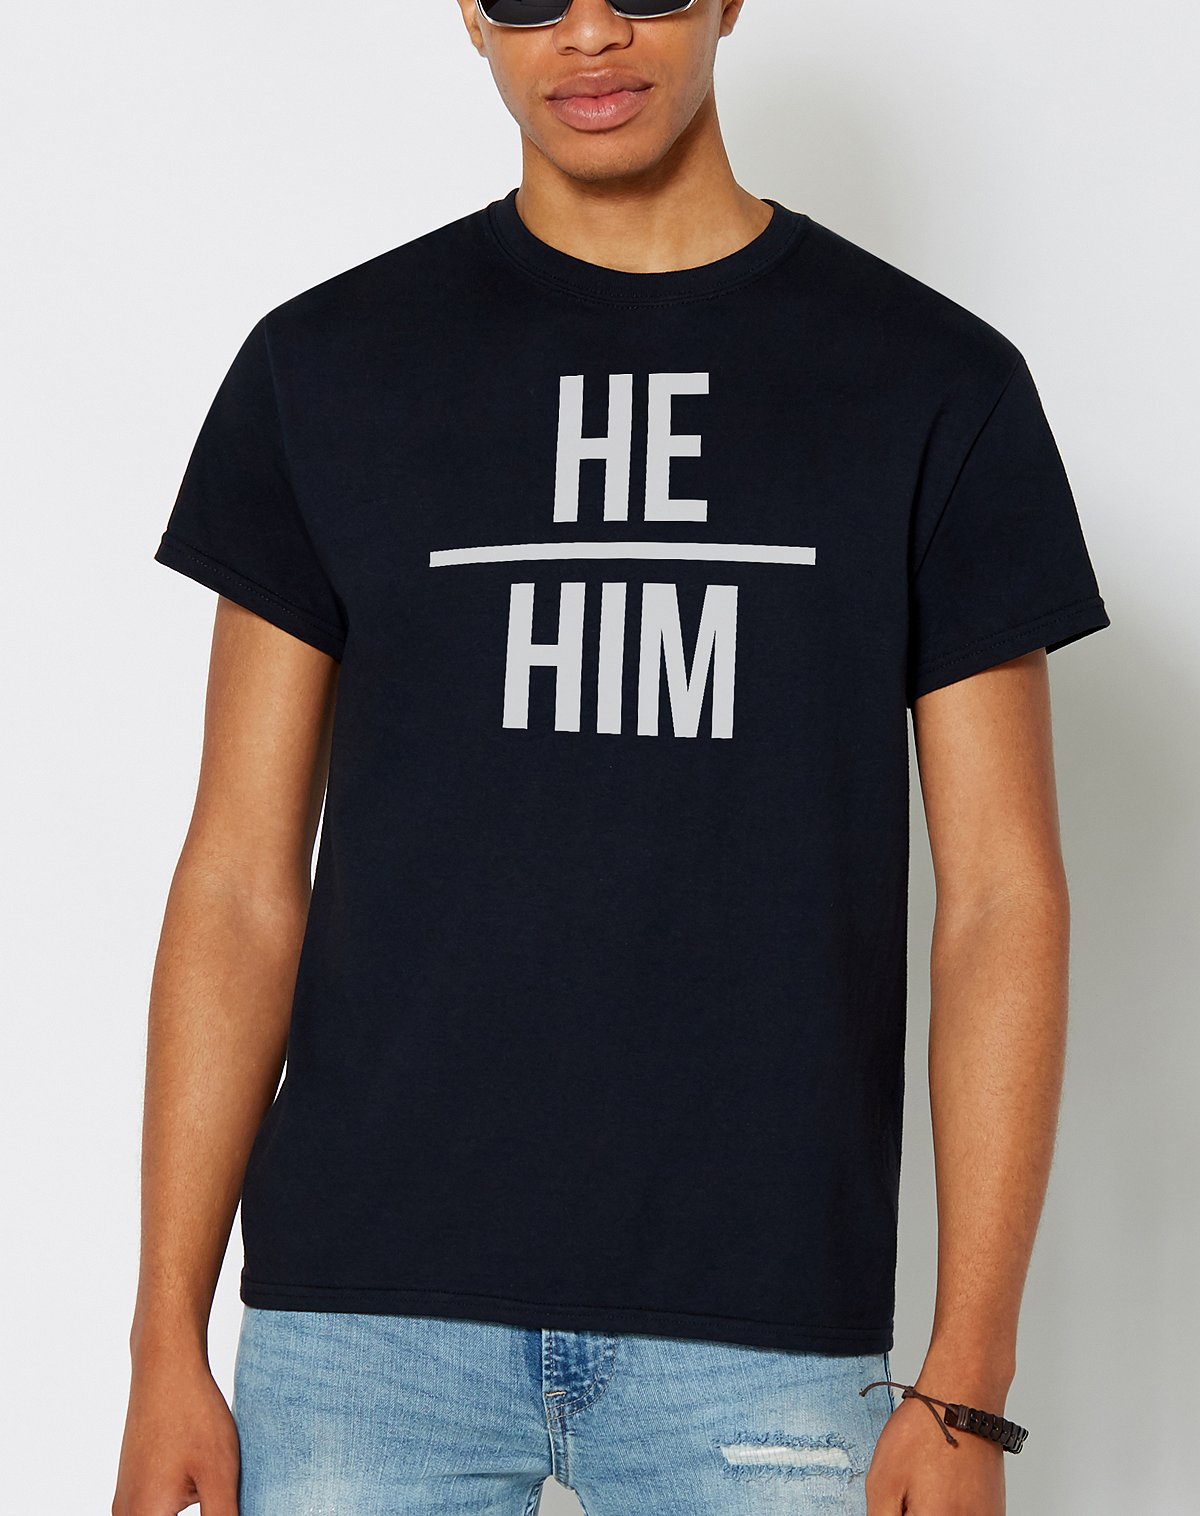 He/Him Pronoun T Shirt